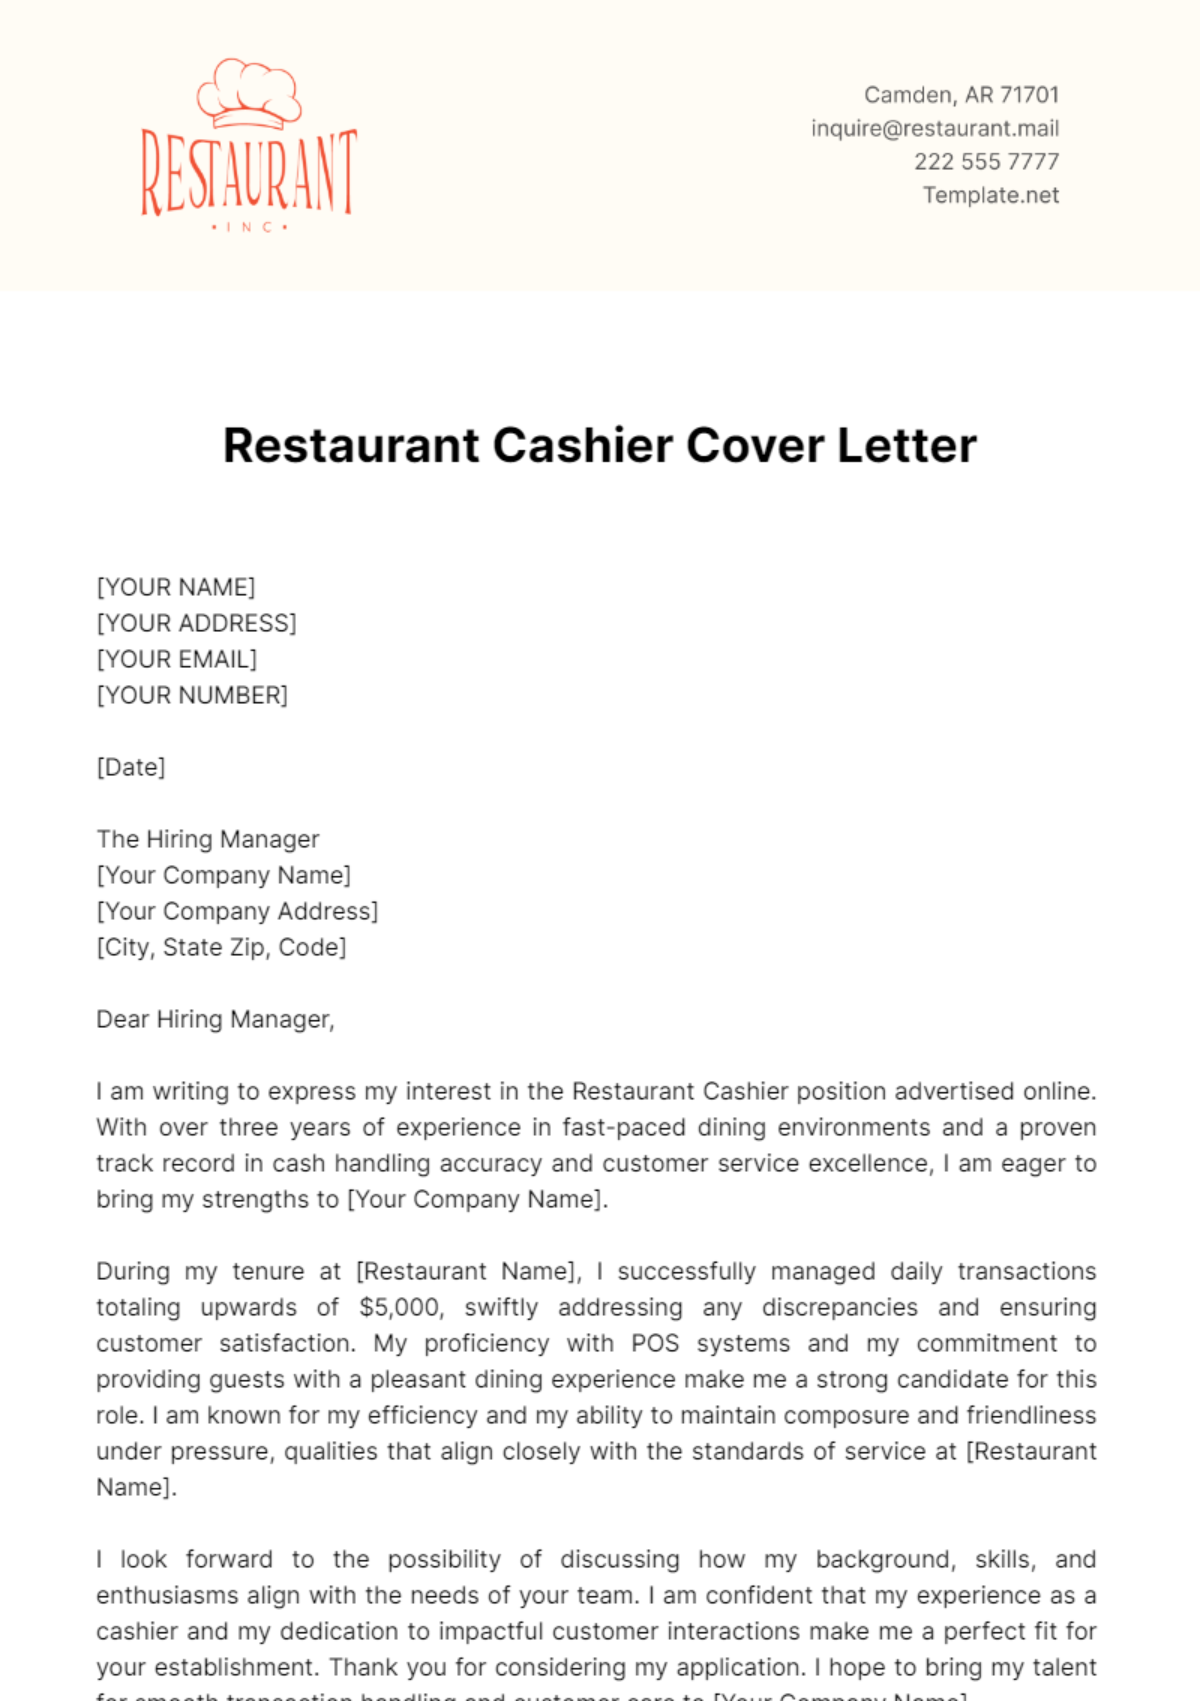 Free Restaurant Cashier Cover Letter Template